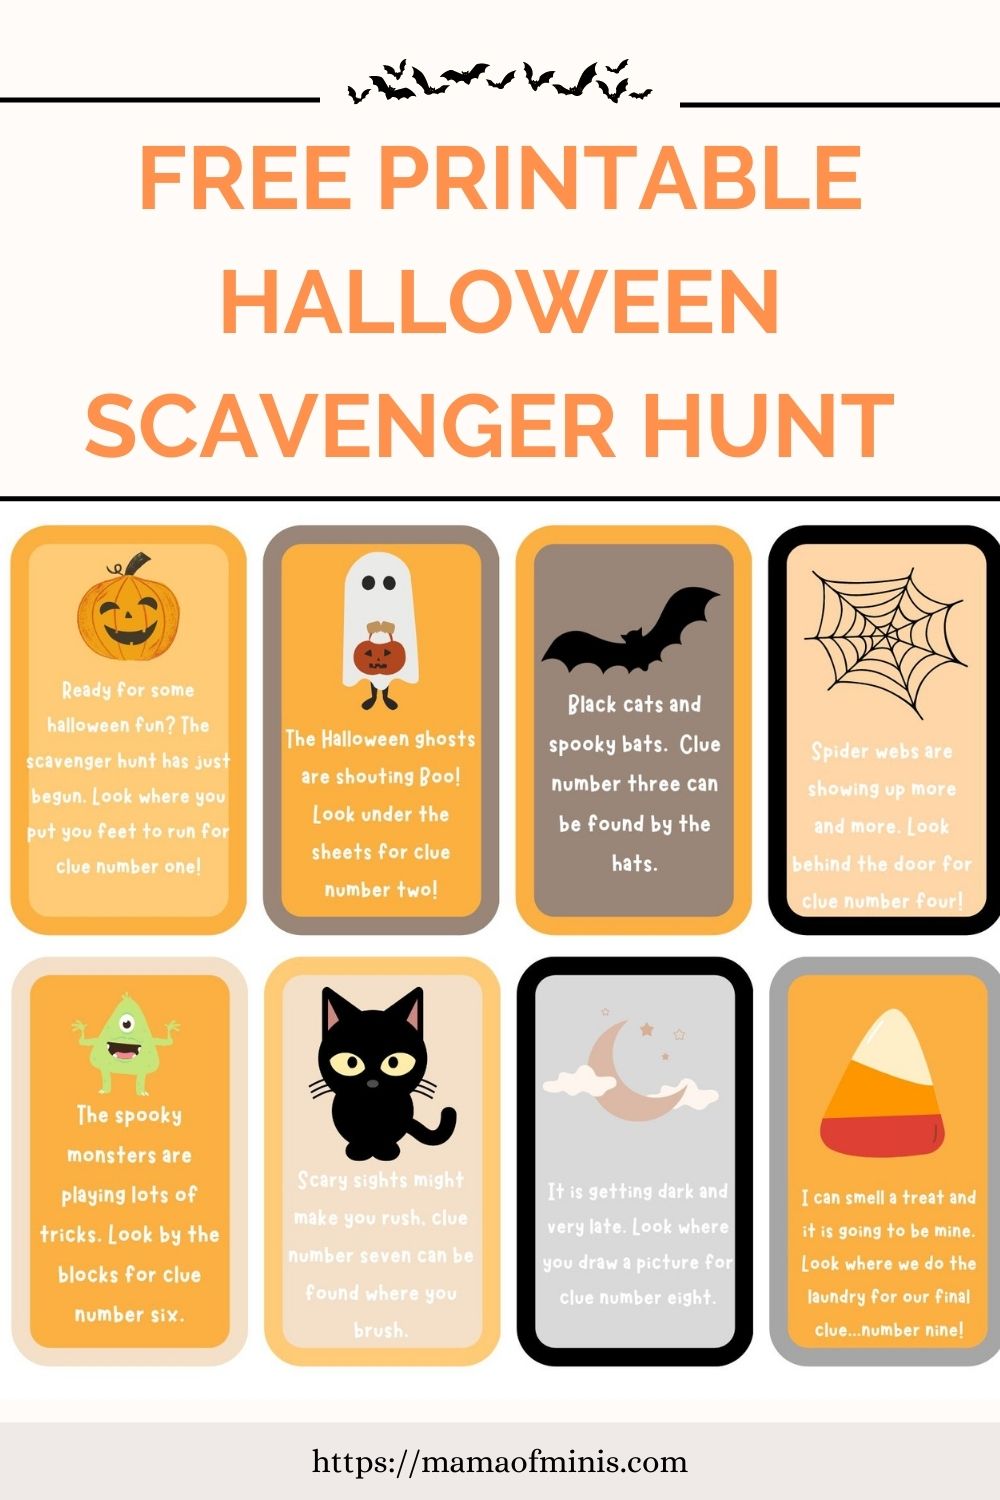 Free Printable Halloween Scavenger Hunt PDF